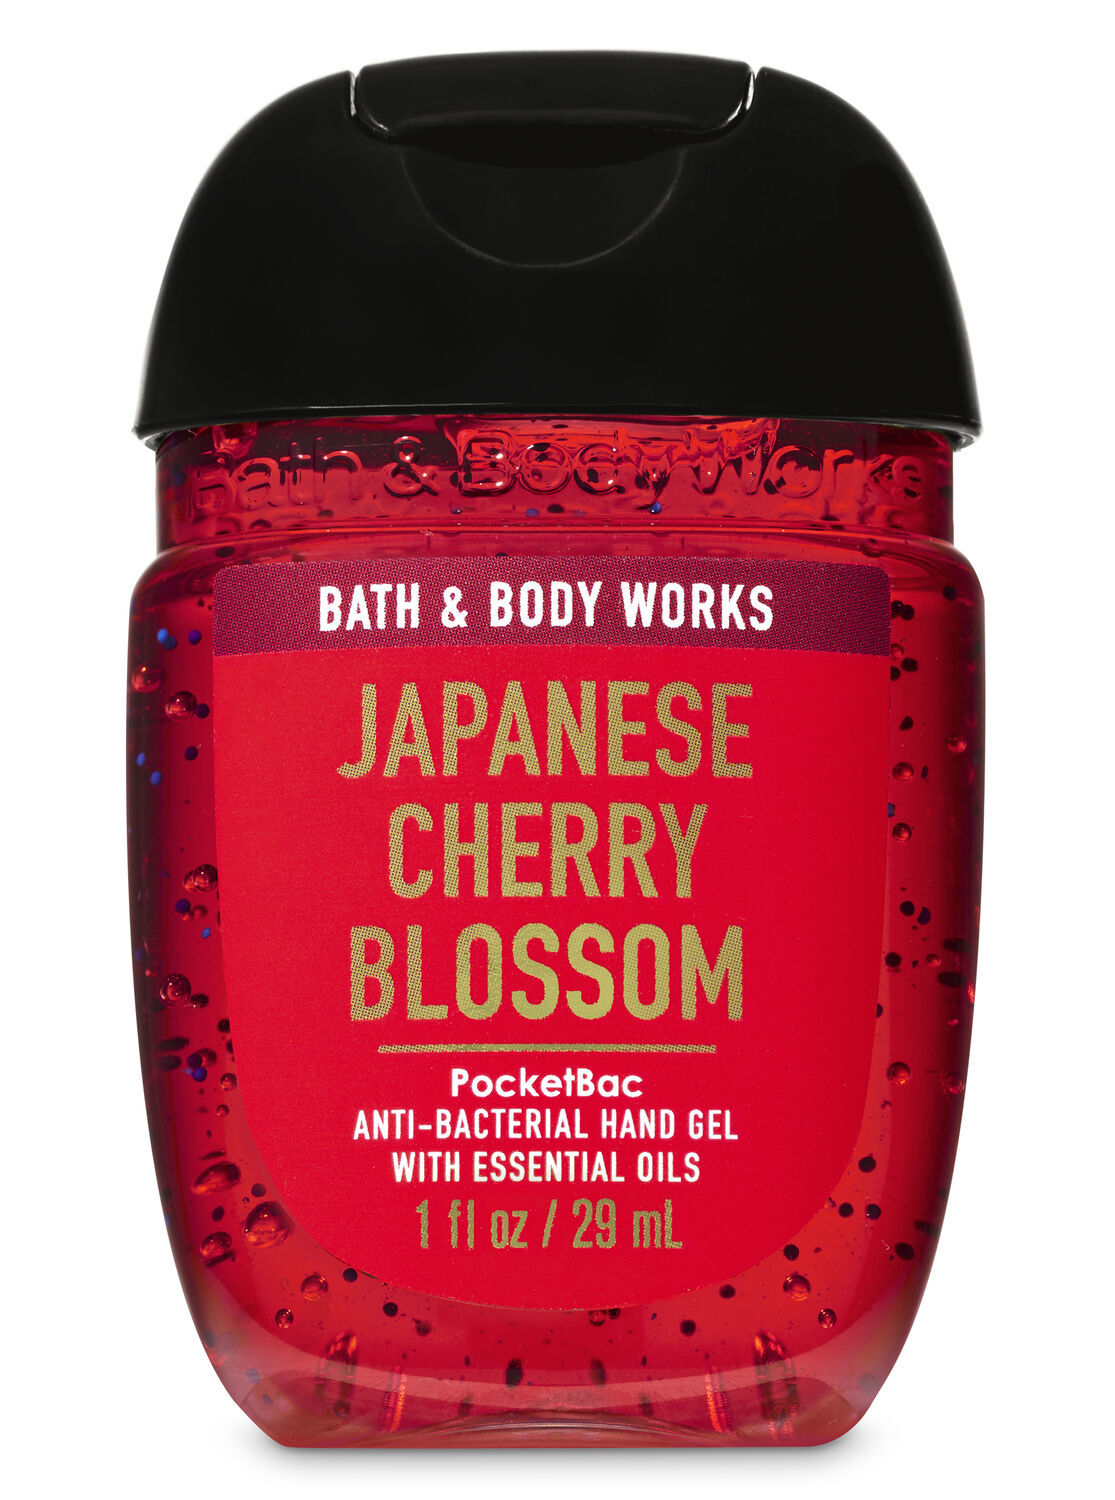 Bath And Body Works Pocketbac Hand Sanitizer Gel Japanese Cherry Blossom 1oz Hand Sanitizers 